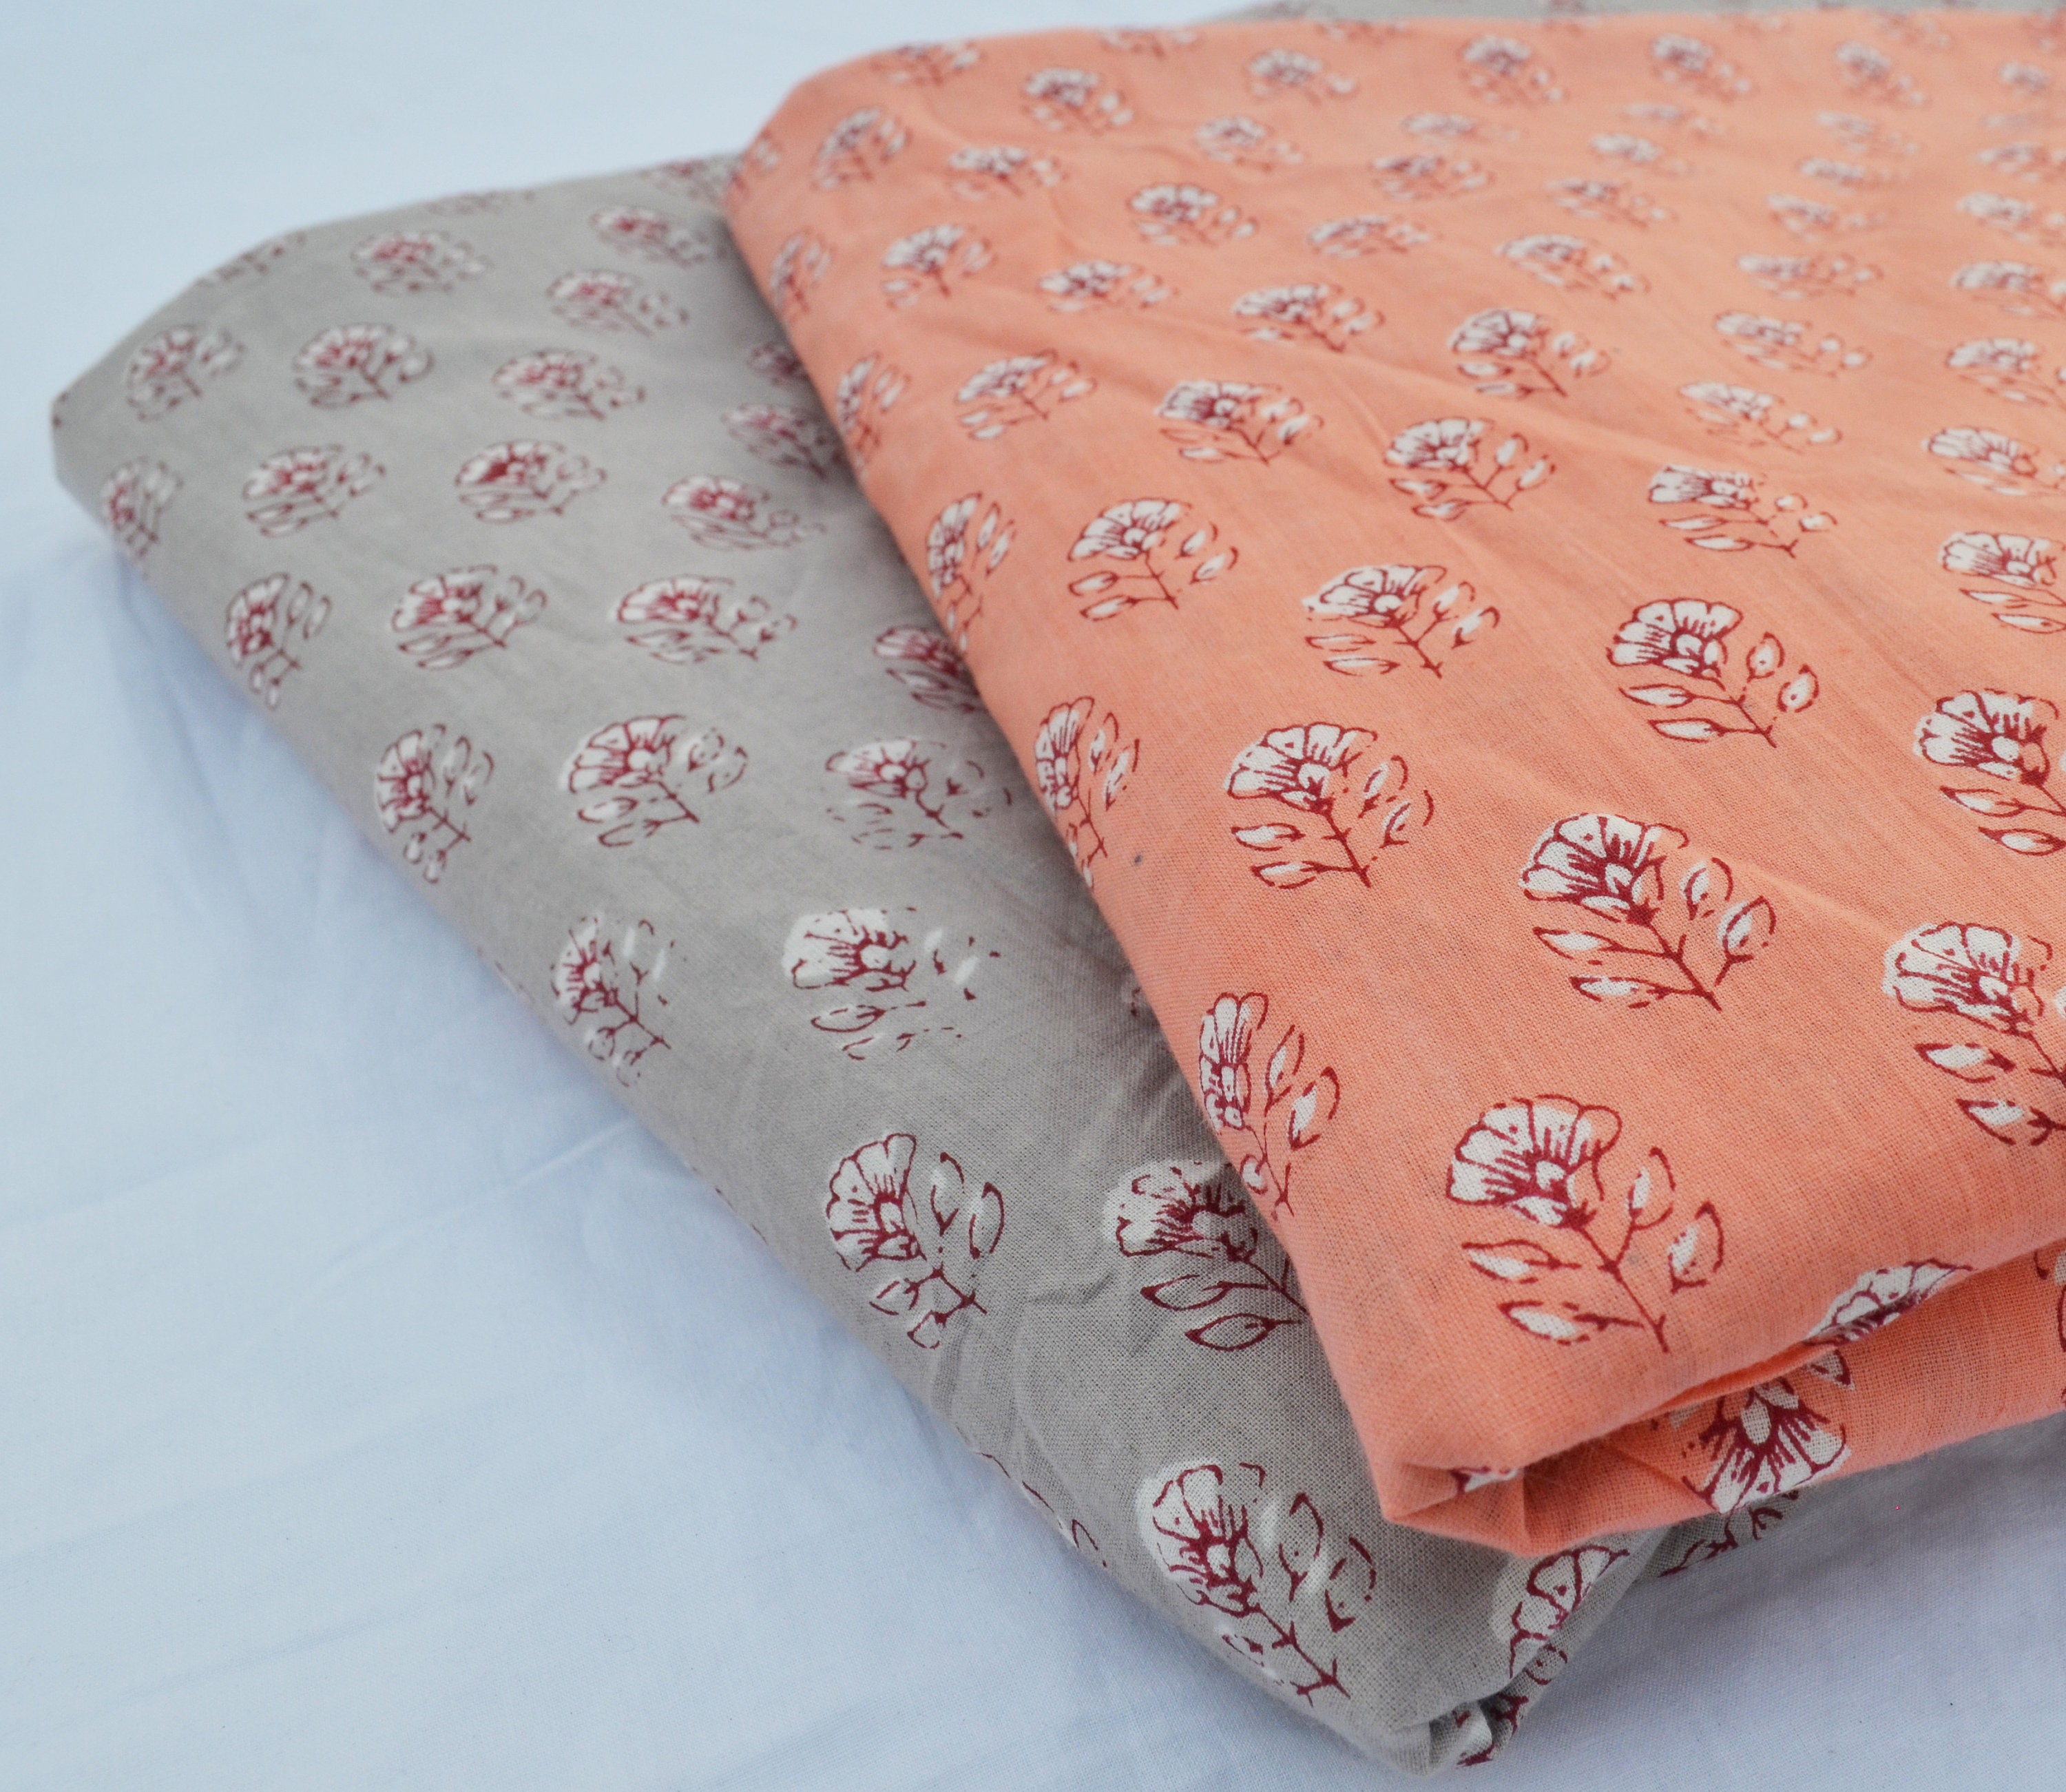 Flex Cotton Fabric at best price in Jaipur by Govind Enterprises